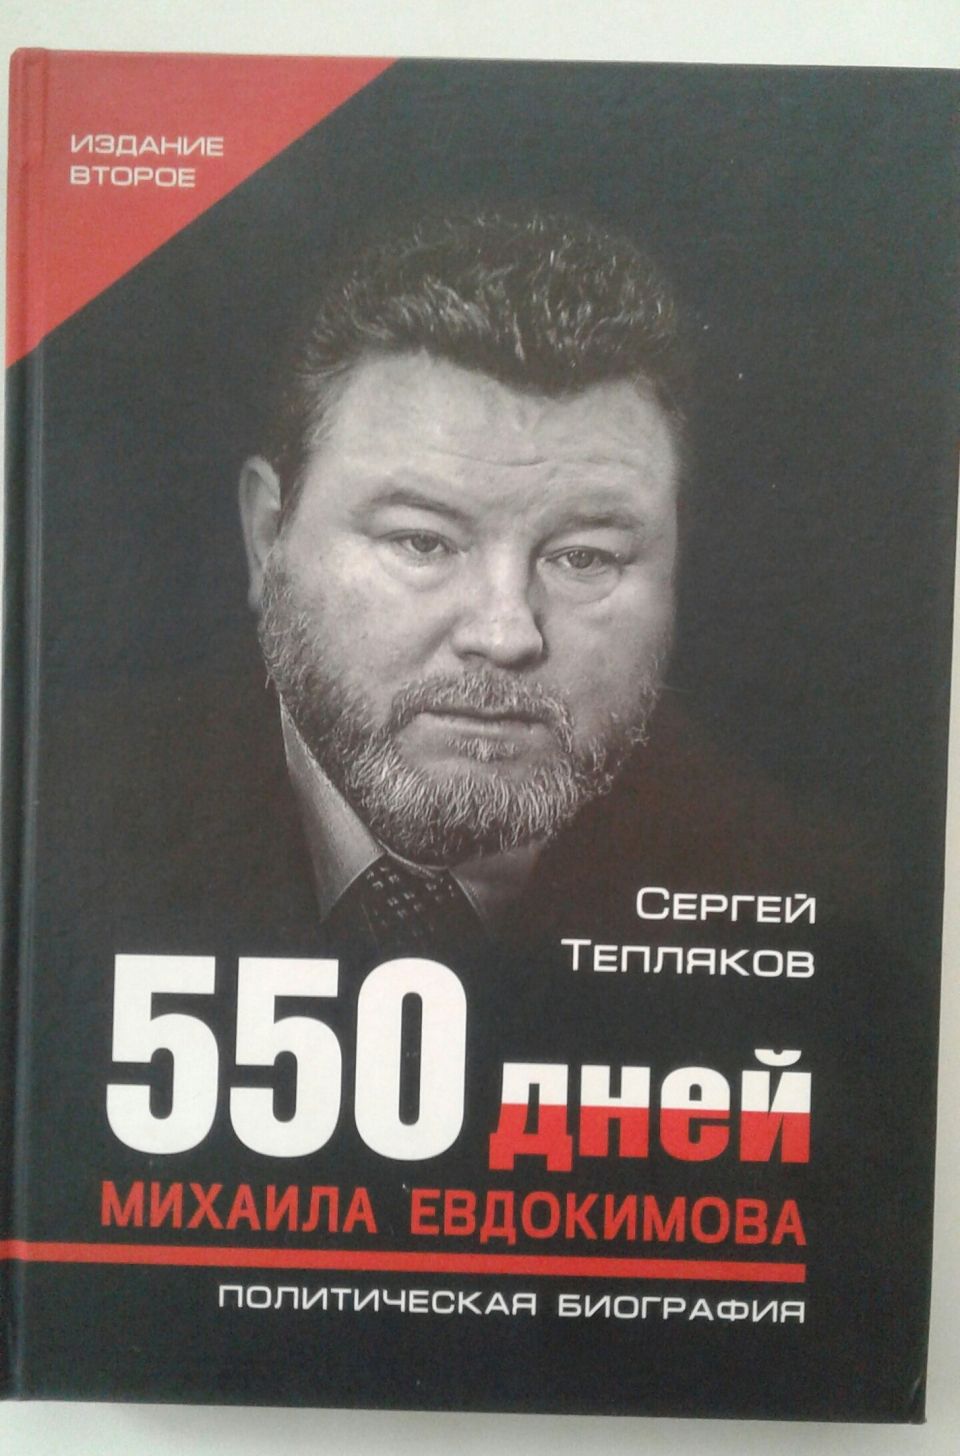 Книга Сергея Теплякова "550 дней Михаила Евдокимова